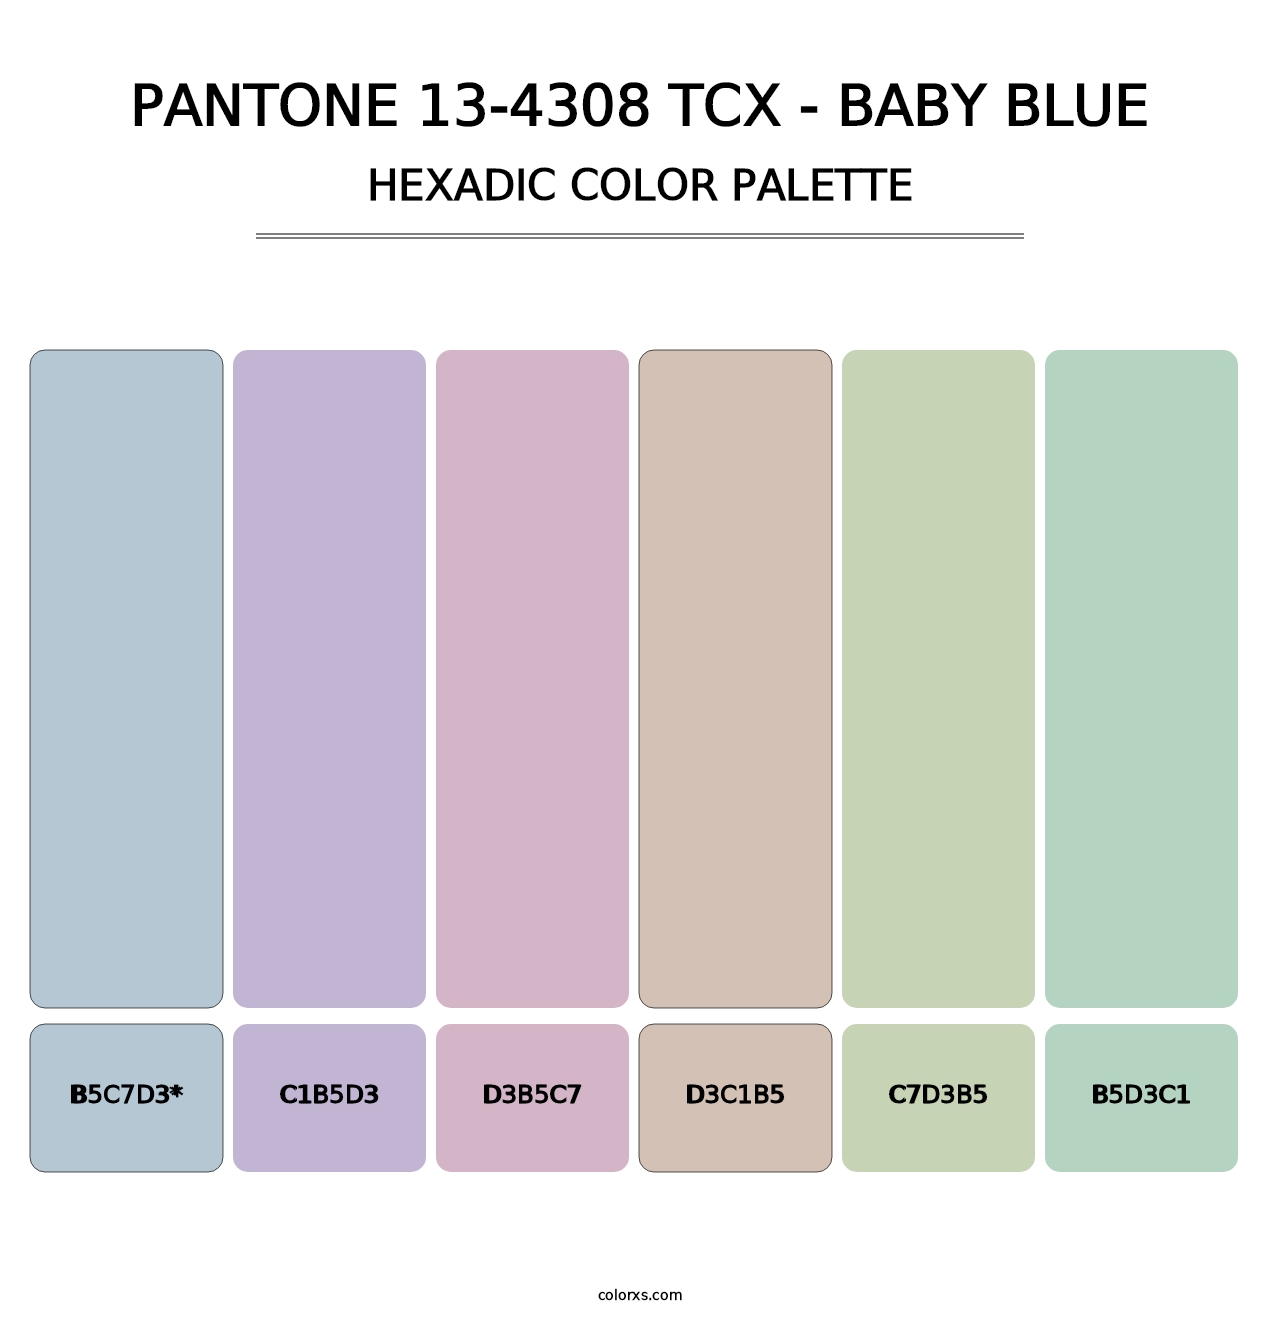 PANTONE 13-4308 TCX - Baby Blue - Hexadic Color Palette